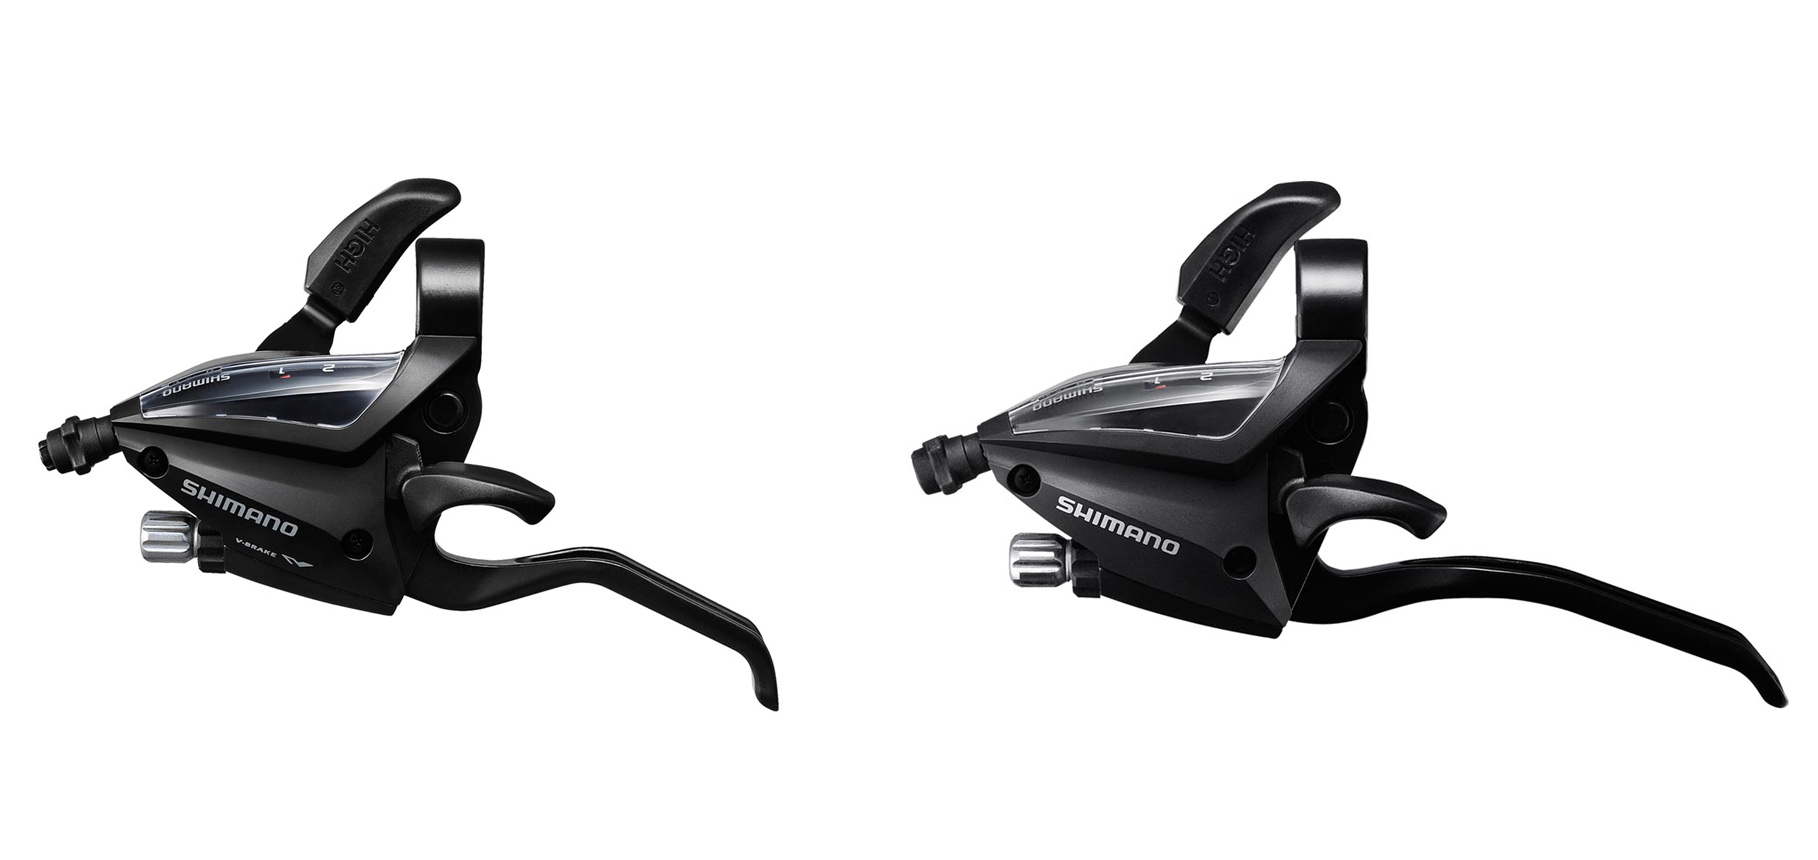 Shimano adds MTB flat mount brakes, new XTR cranks, e-bike batteries with 25% more juice, new Alivio, more